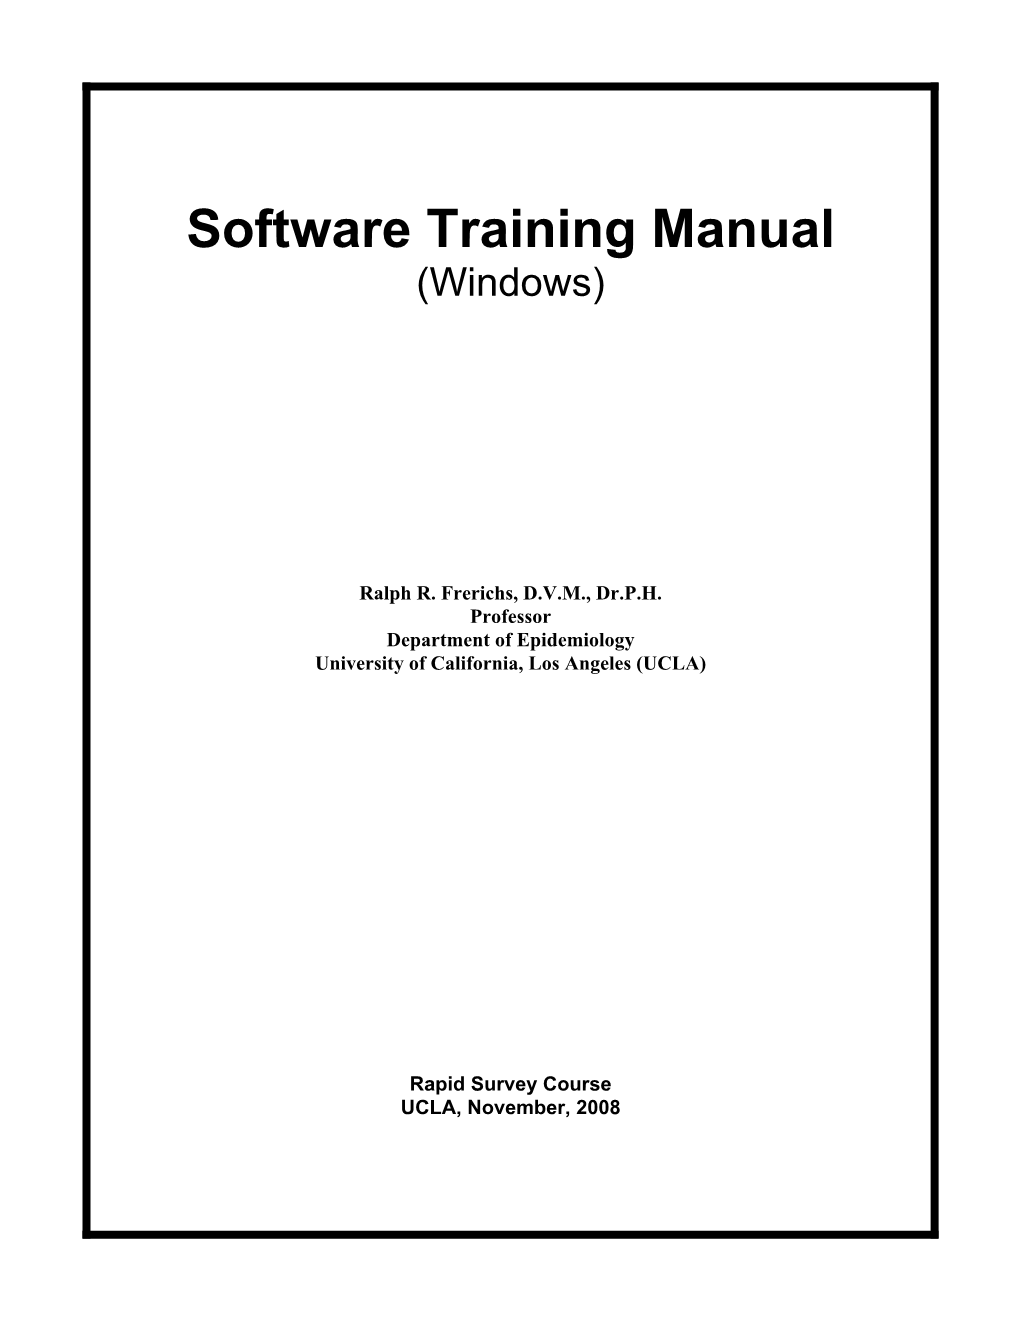 Software Training Manual (Windows)